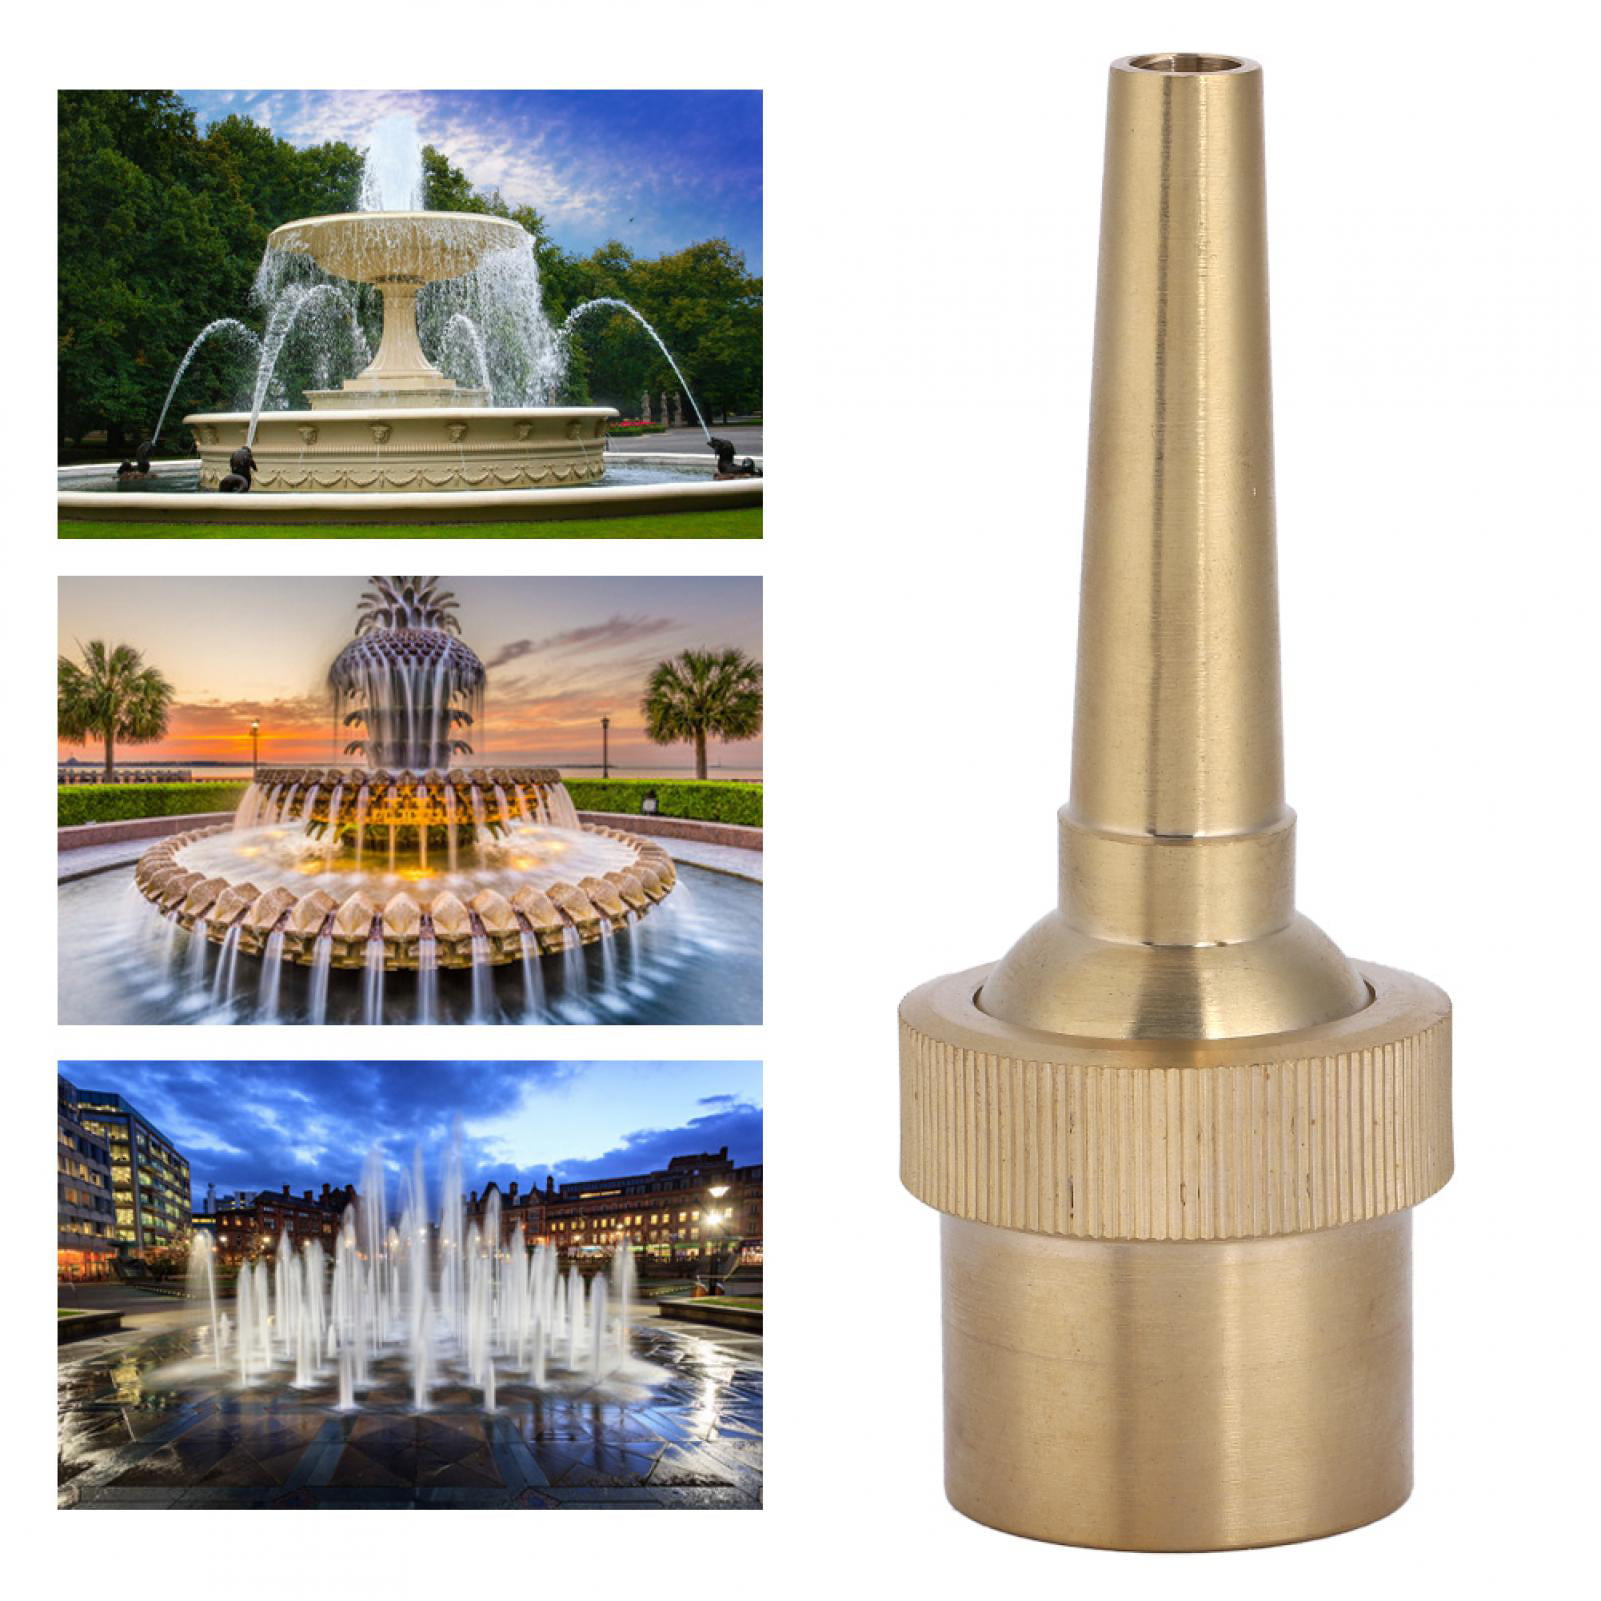 Fountain Nozzle Heads 1/4 Brass Column Multi Direction Jet Pond Fountain Water Spray Sprinkler Head Garden Outdoor Decorations Accessories 